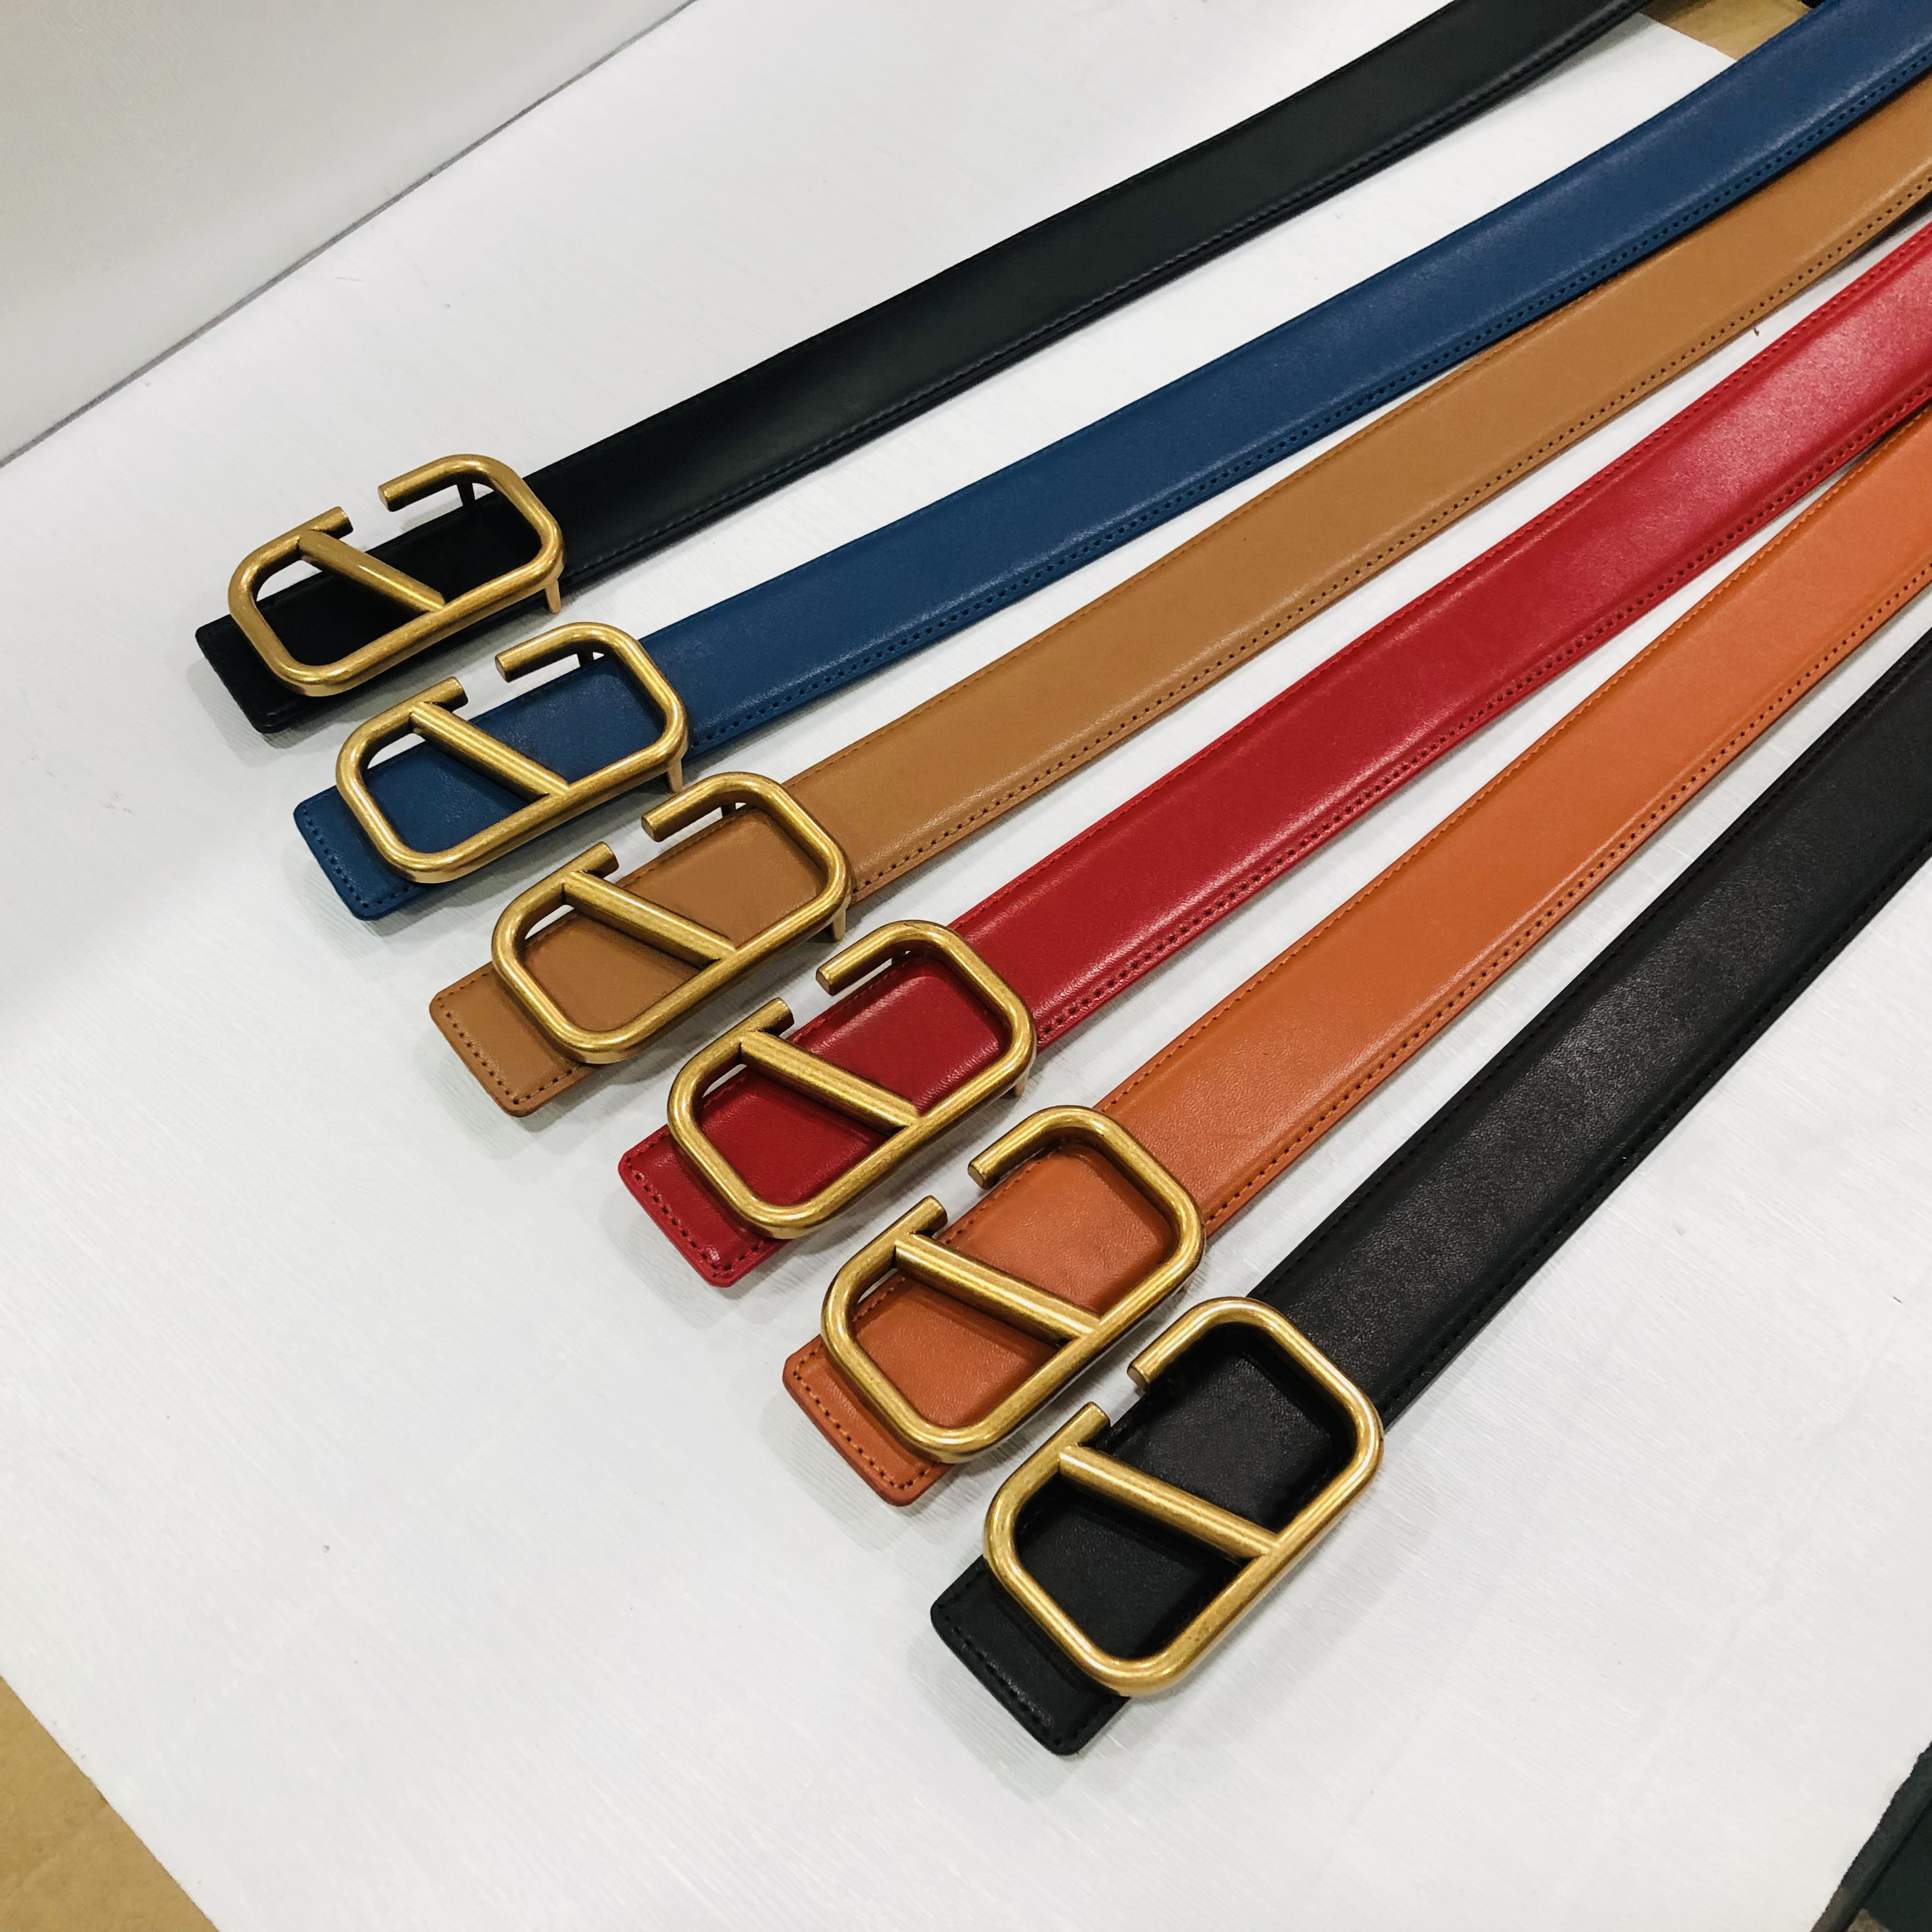 Fashion Classic Solid Gold Letter Men Belts for Women Diseñadores Cinturón Big Buckle 5 Colors ancho 4 cm con caja roja